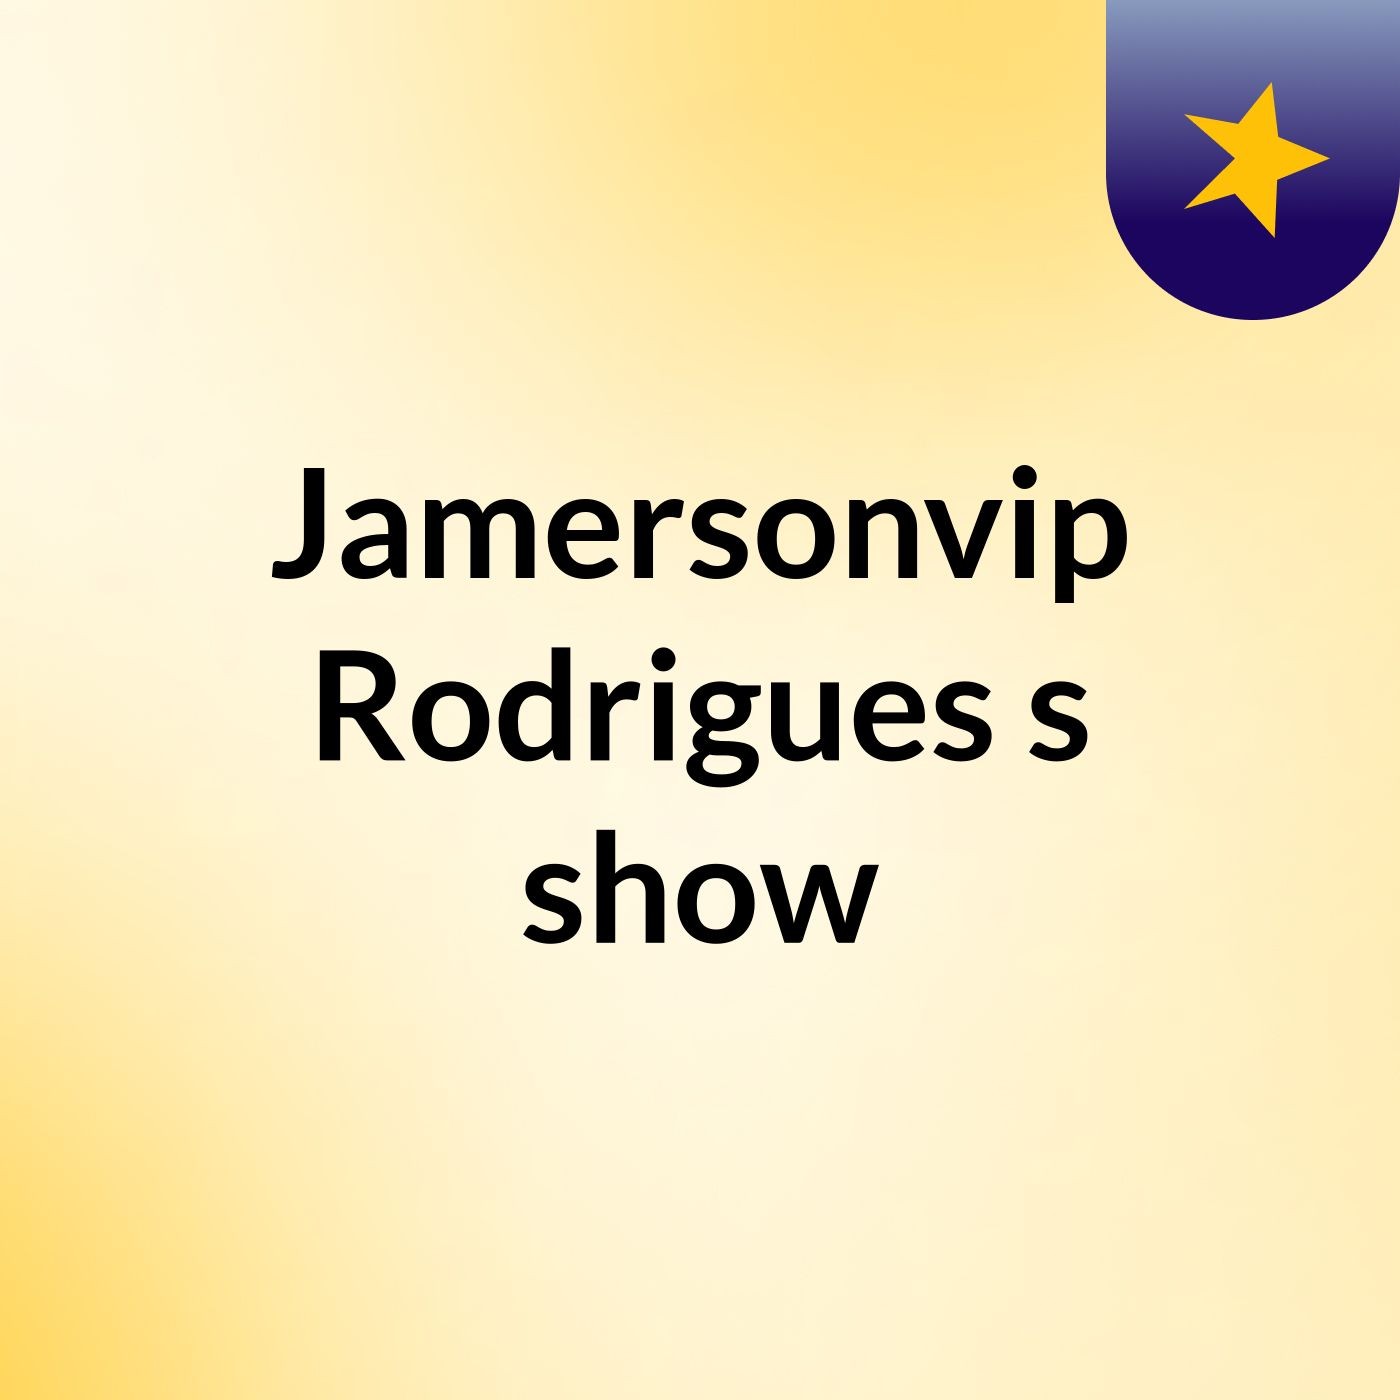 Episódio 10 - Jamersonvip Rodrigues's show